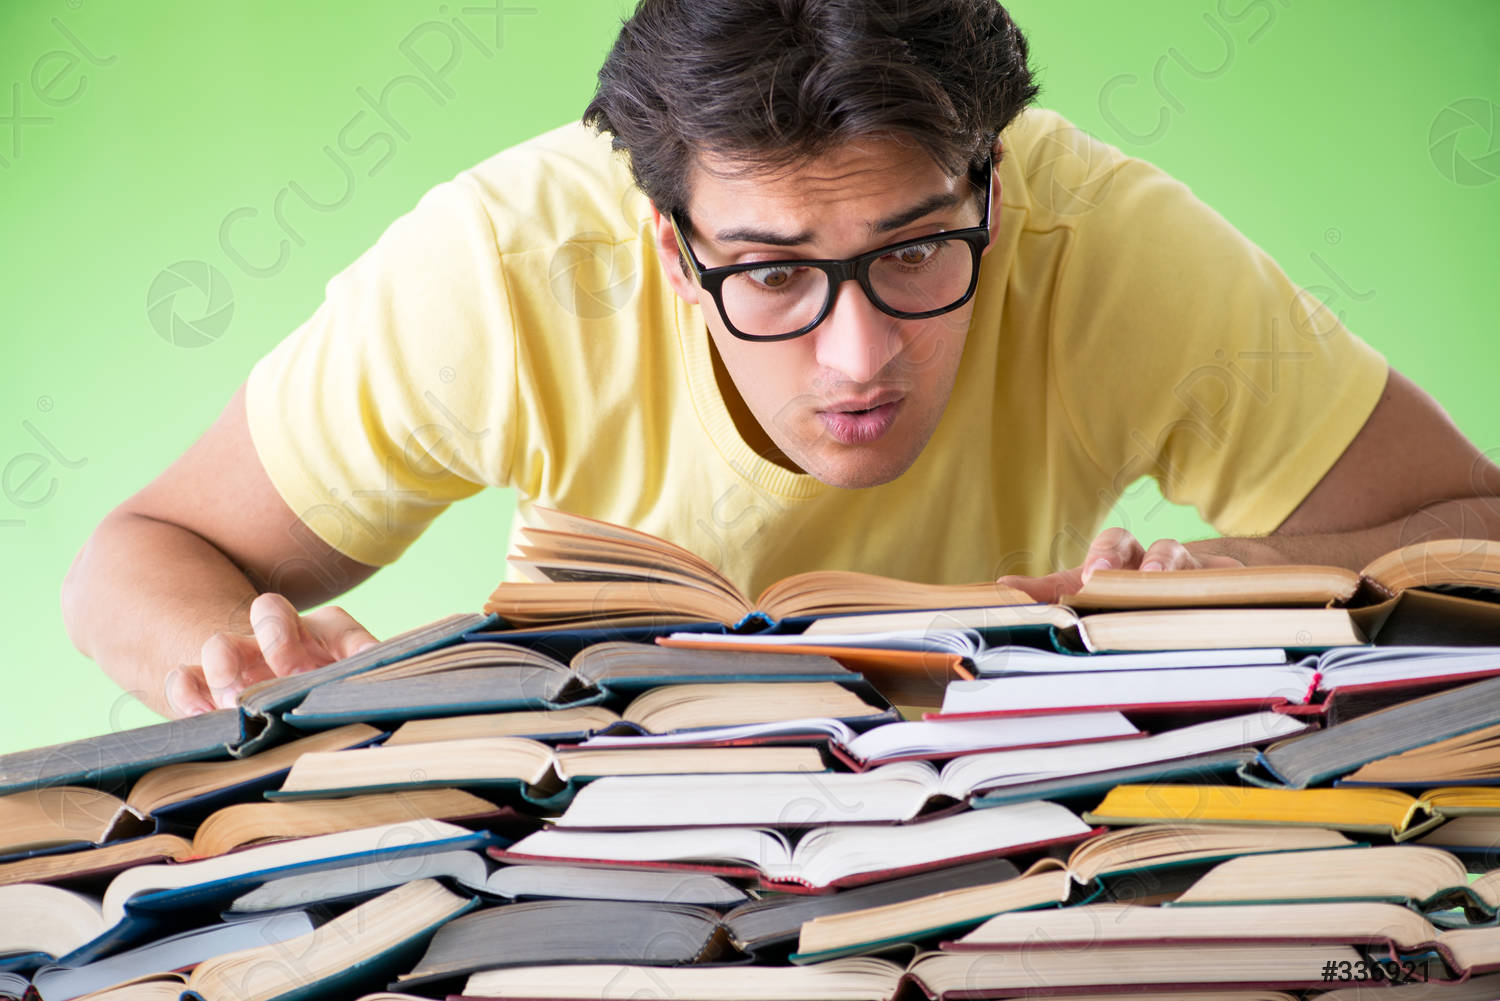 If he passes his exams he. Трудолюбие студенты. Too many books. Exam background.